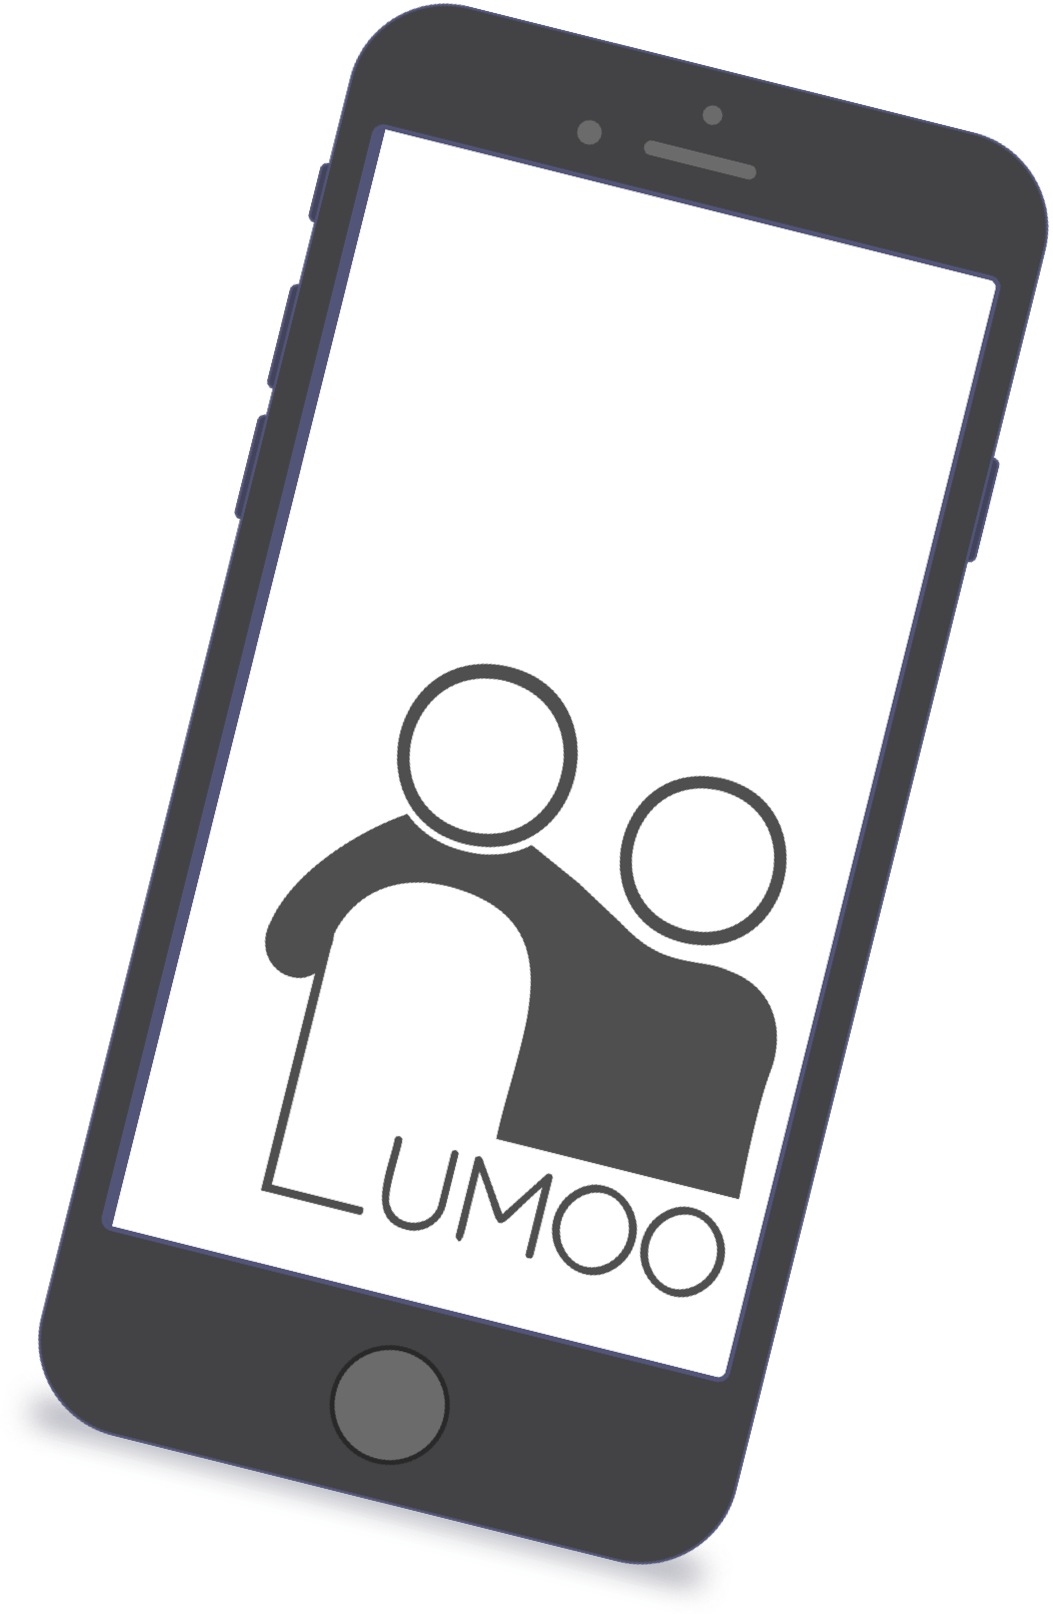 Grafik Lumoo App mobile